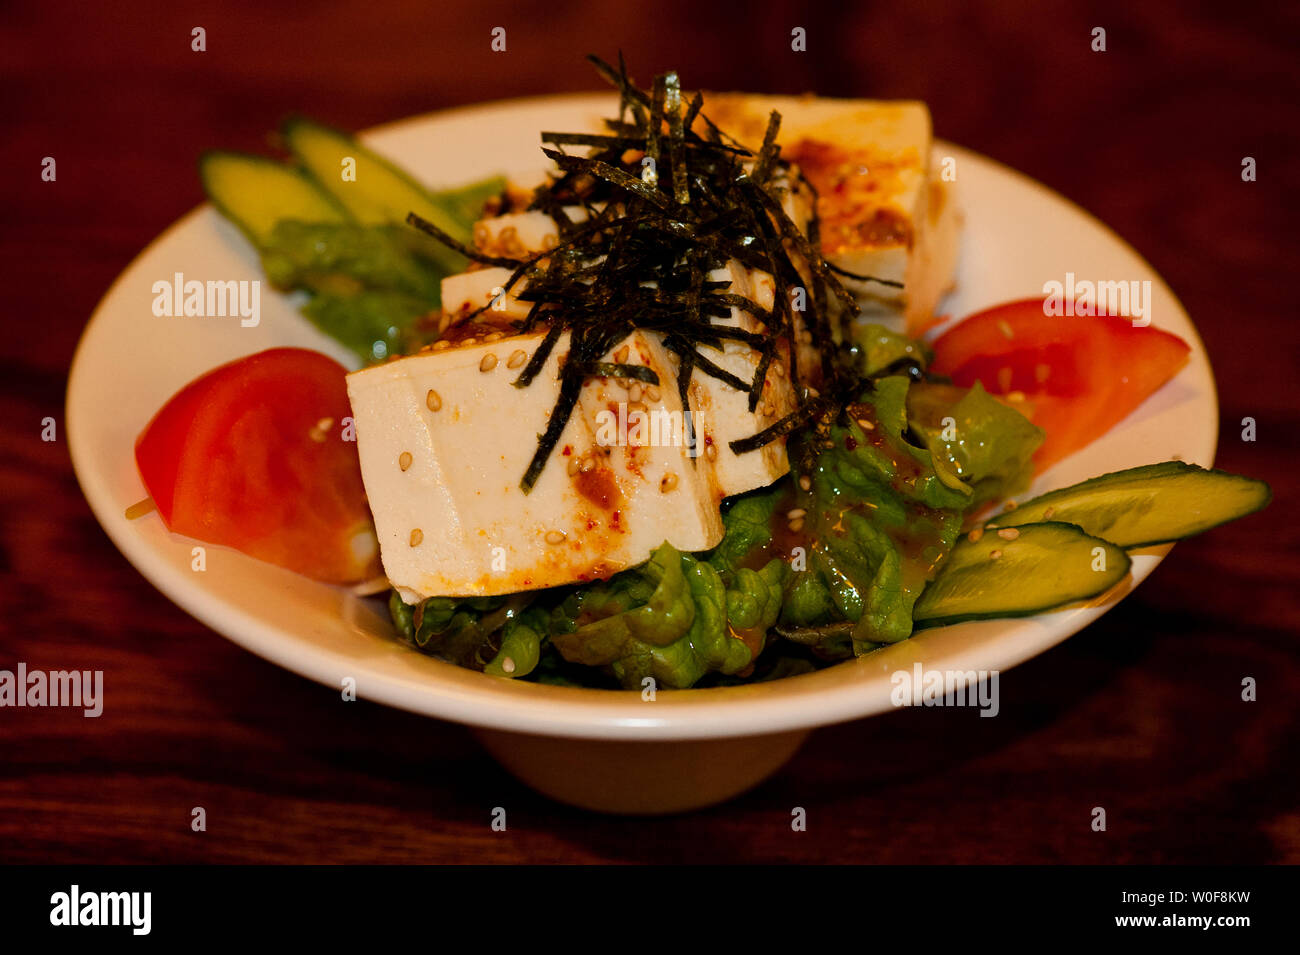 Tofu based dish along with raw vegetables and  alguae, Kawaguchiko, Japan Stock Photo